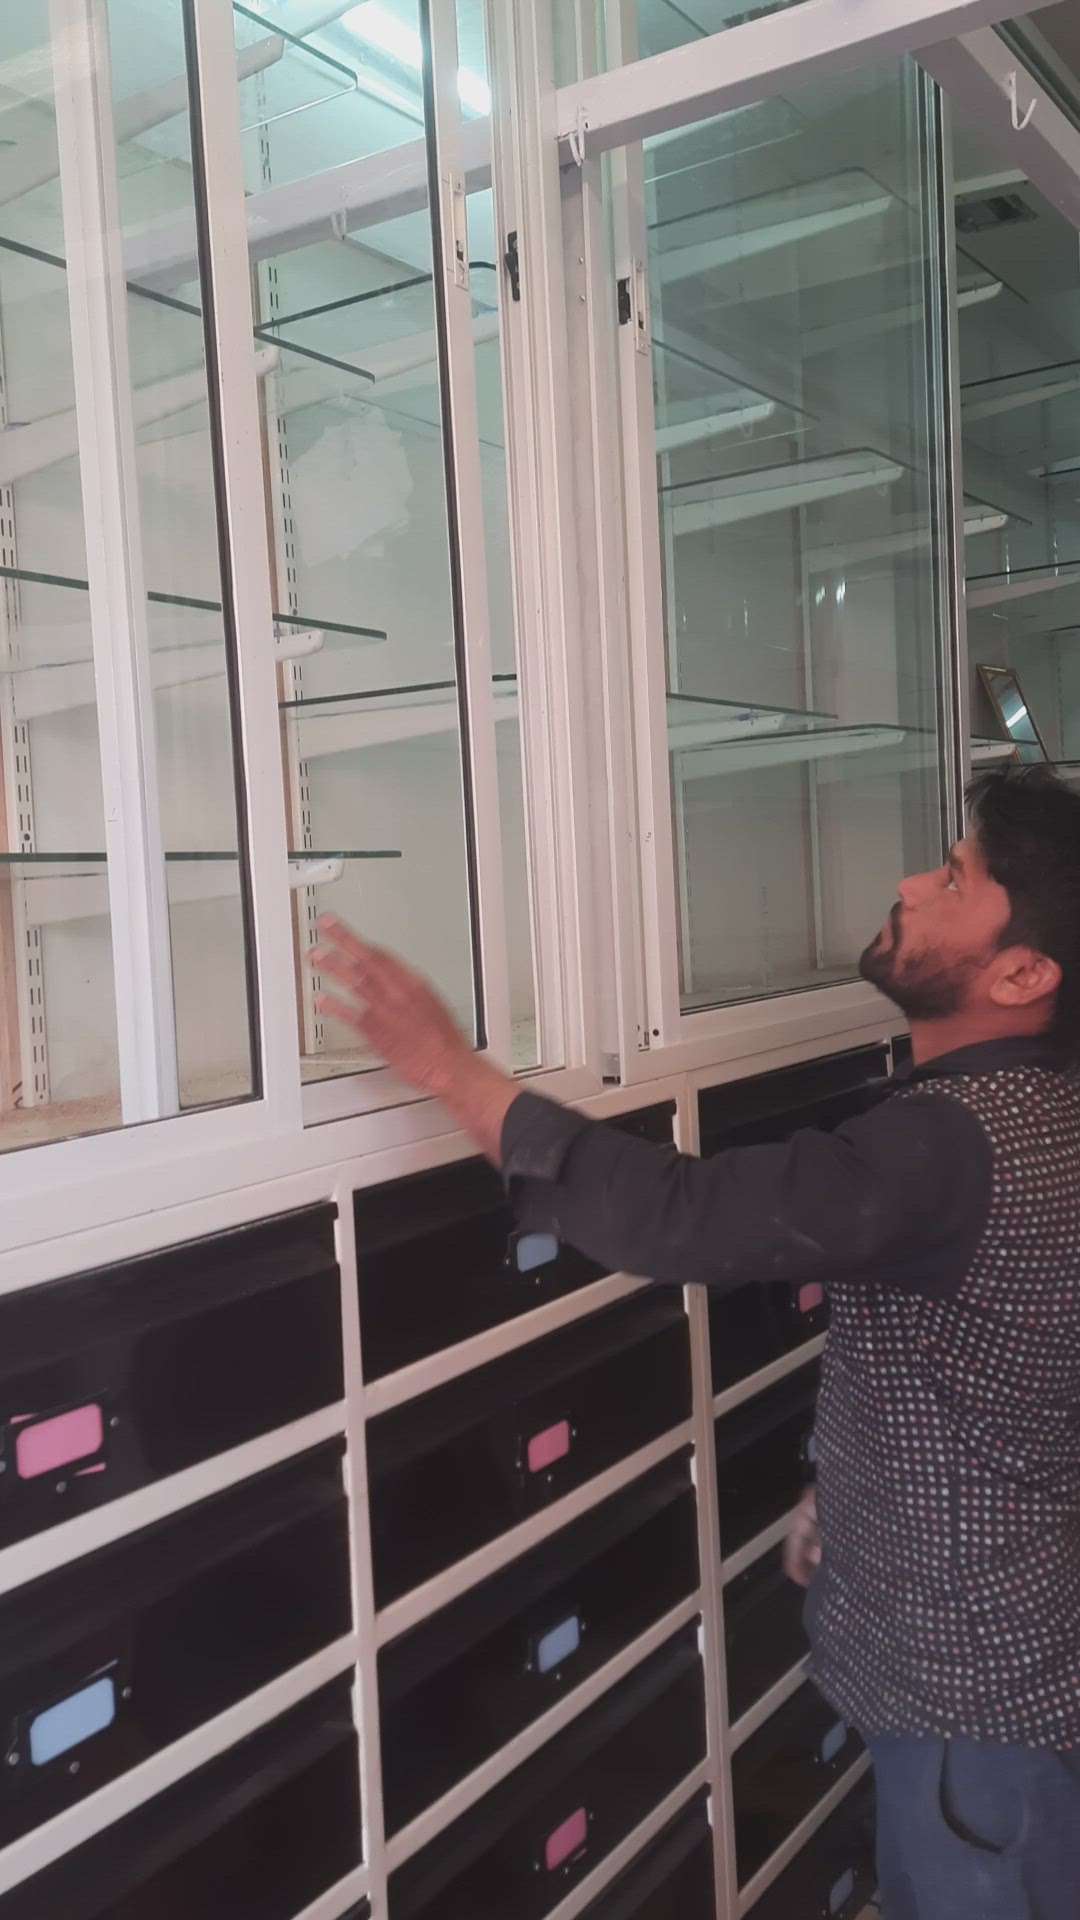 window section aluminium
200₹ square feet